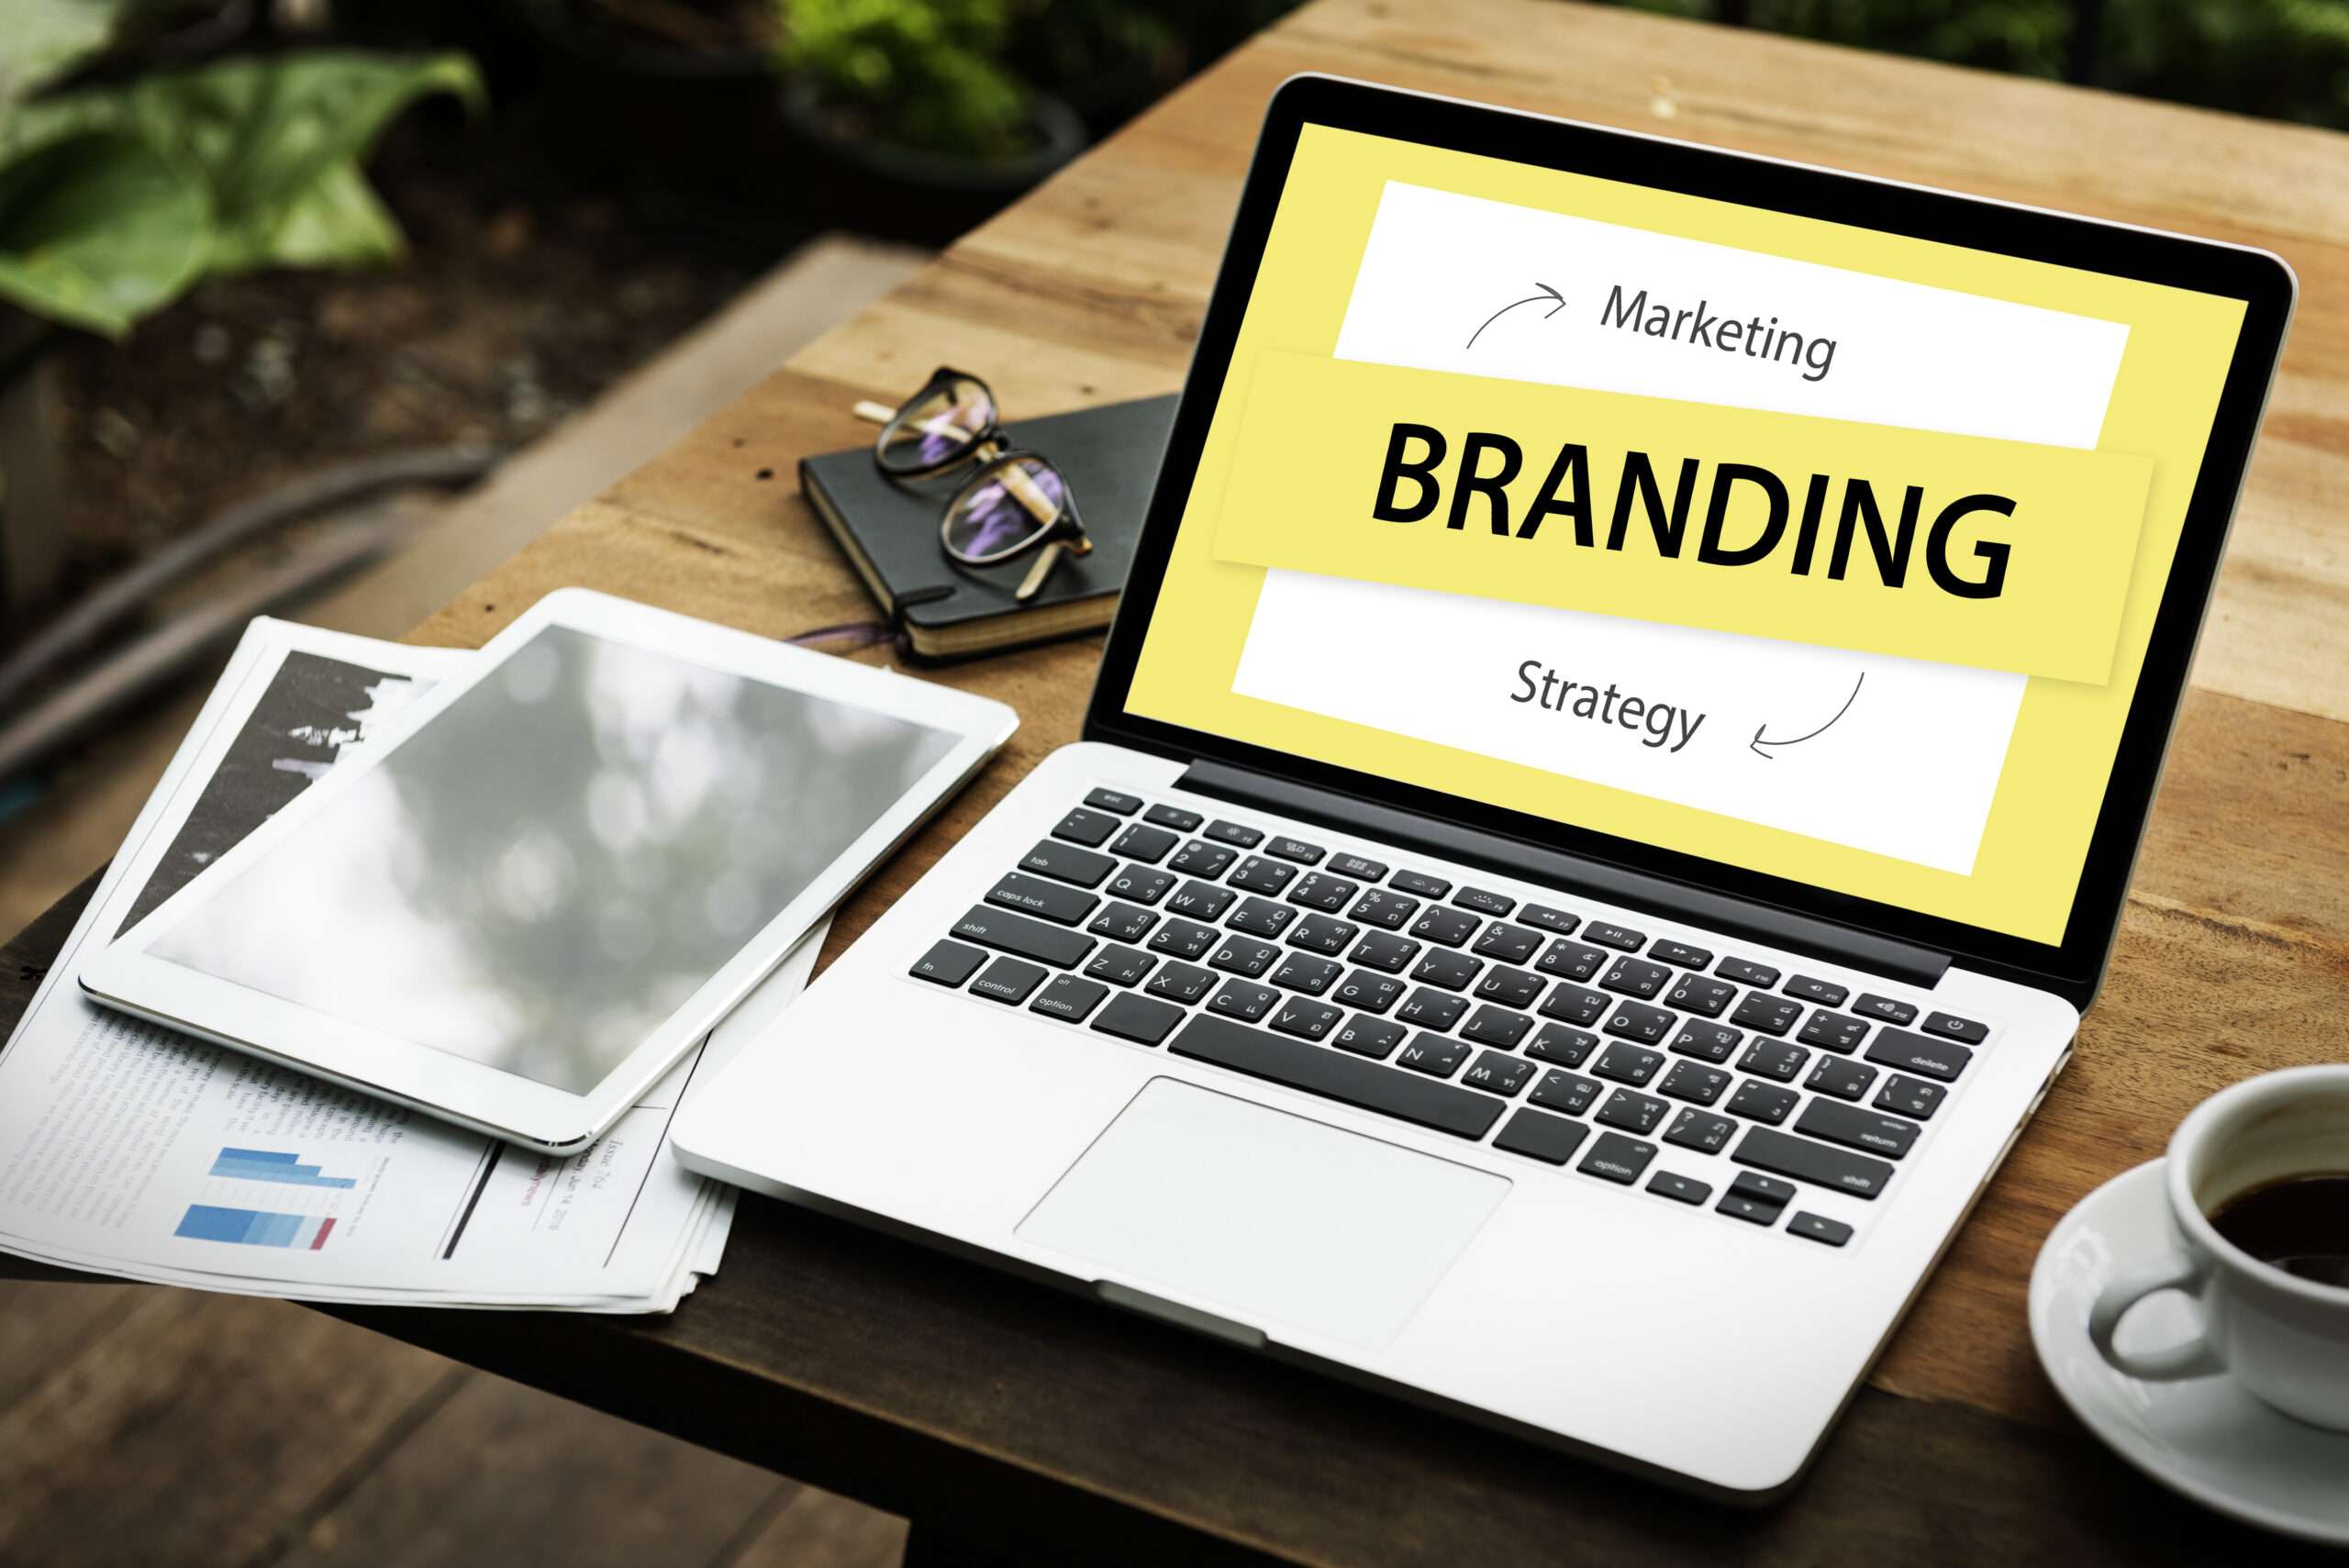 What is branding? Branding